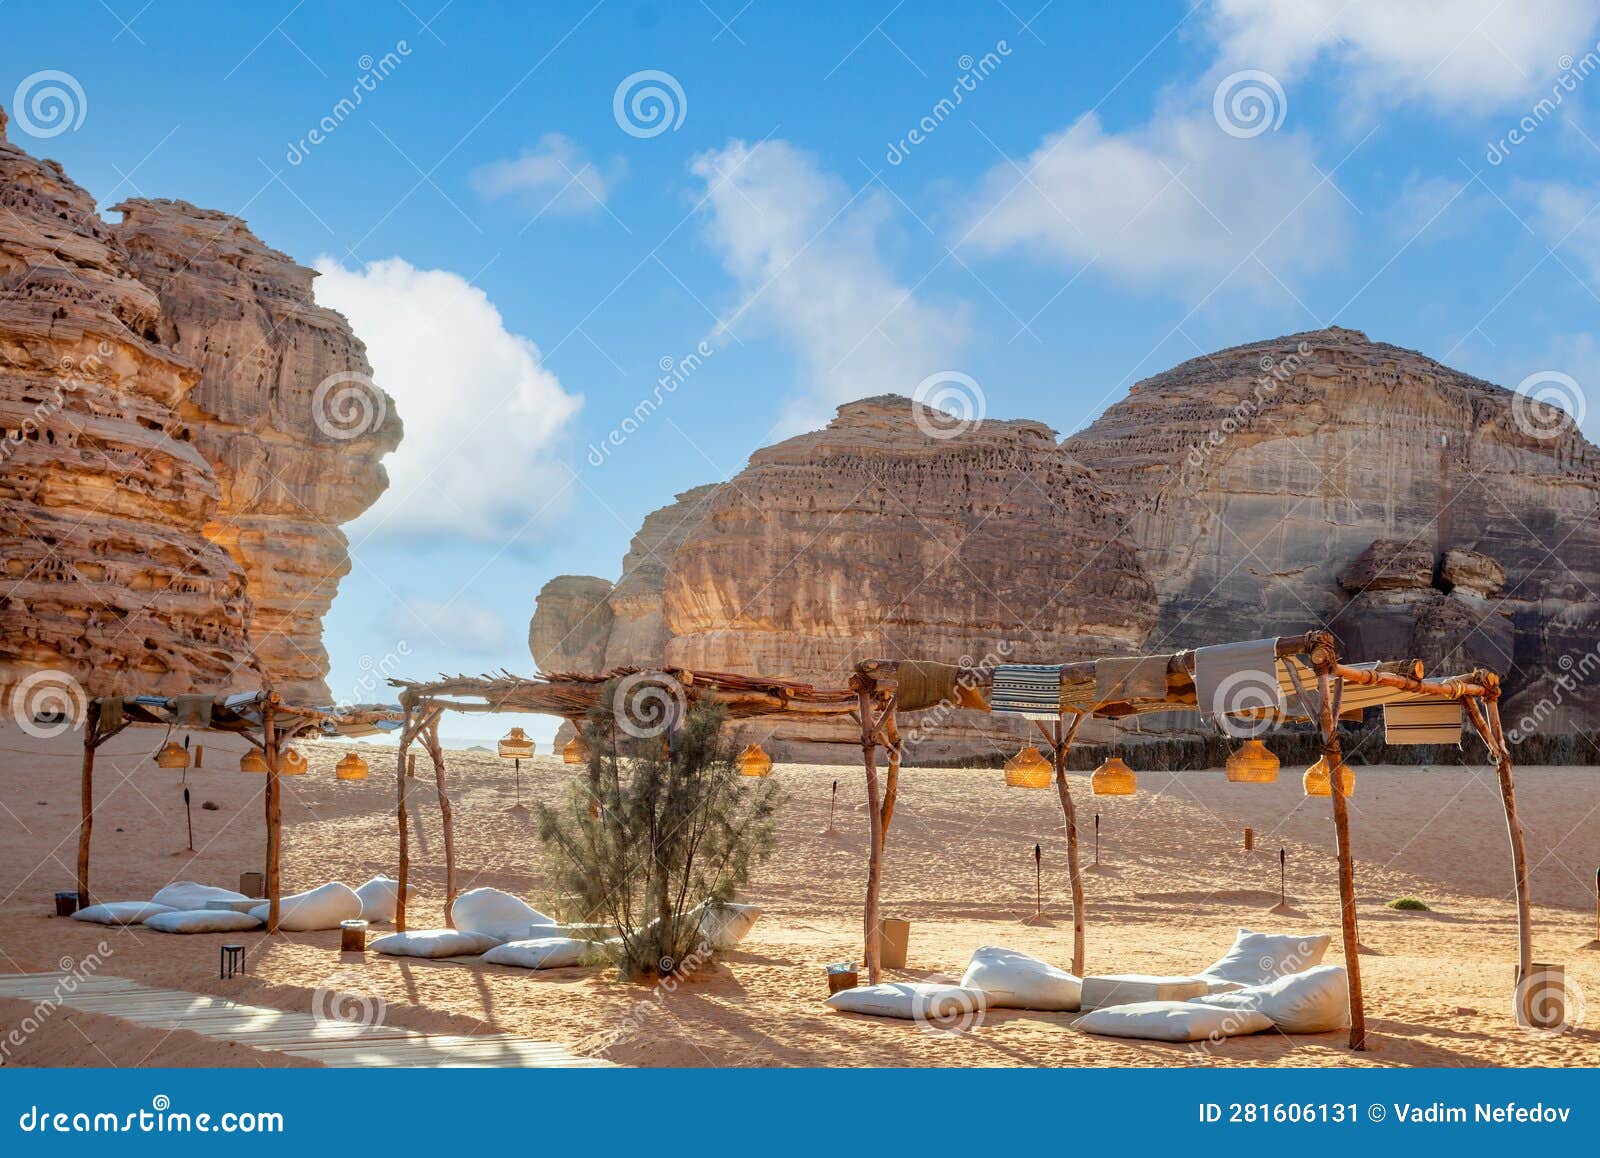 outdoor lounge in front of elephant rock erosion monolith standing in the desert, al ula, saudi arabia